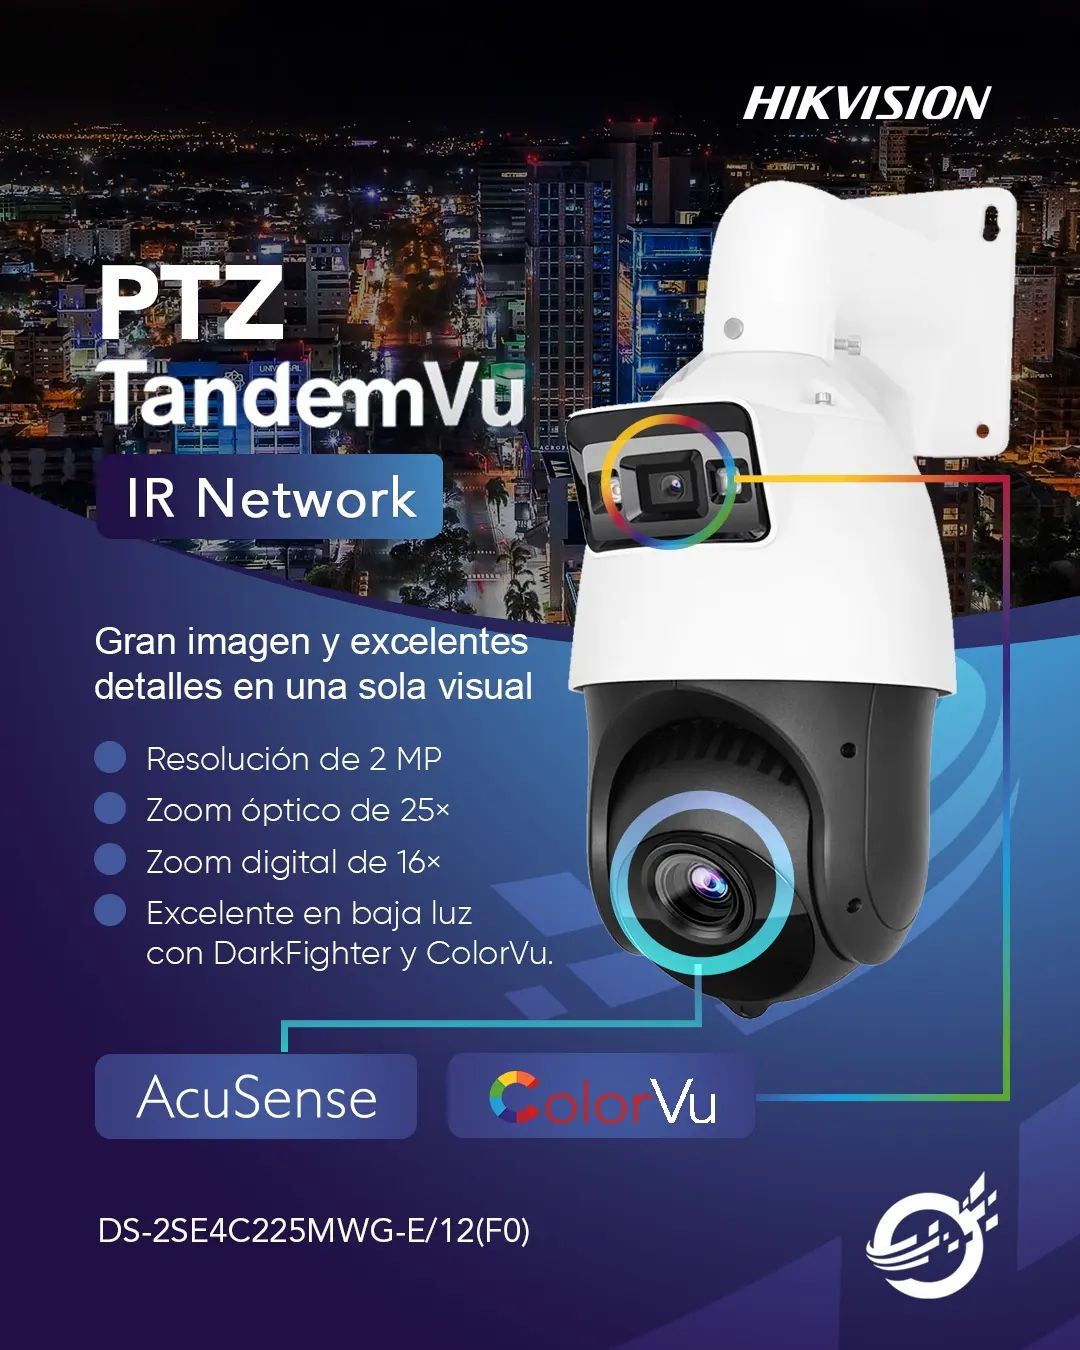 🌟 ¡Explora la innovadora cámara PTZ TandemVu de Hikvision! Con tecnologías a...